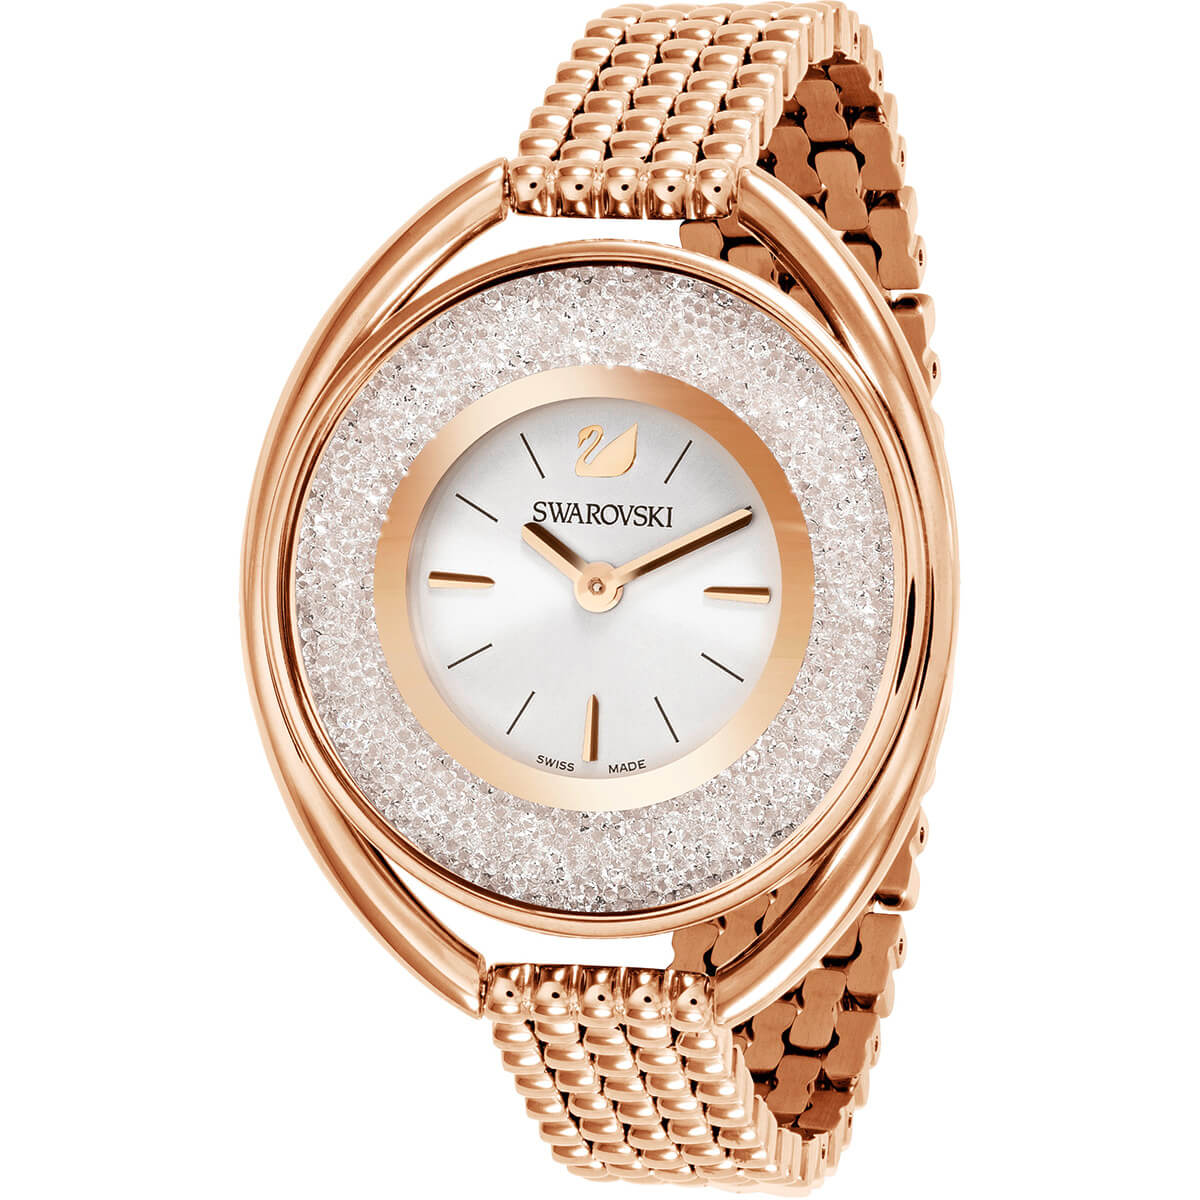 Swarovski Rose Gold and Crystal Crystalline Oval Watch